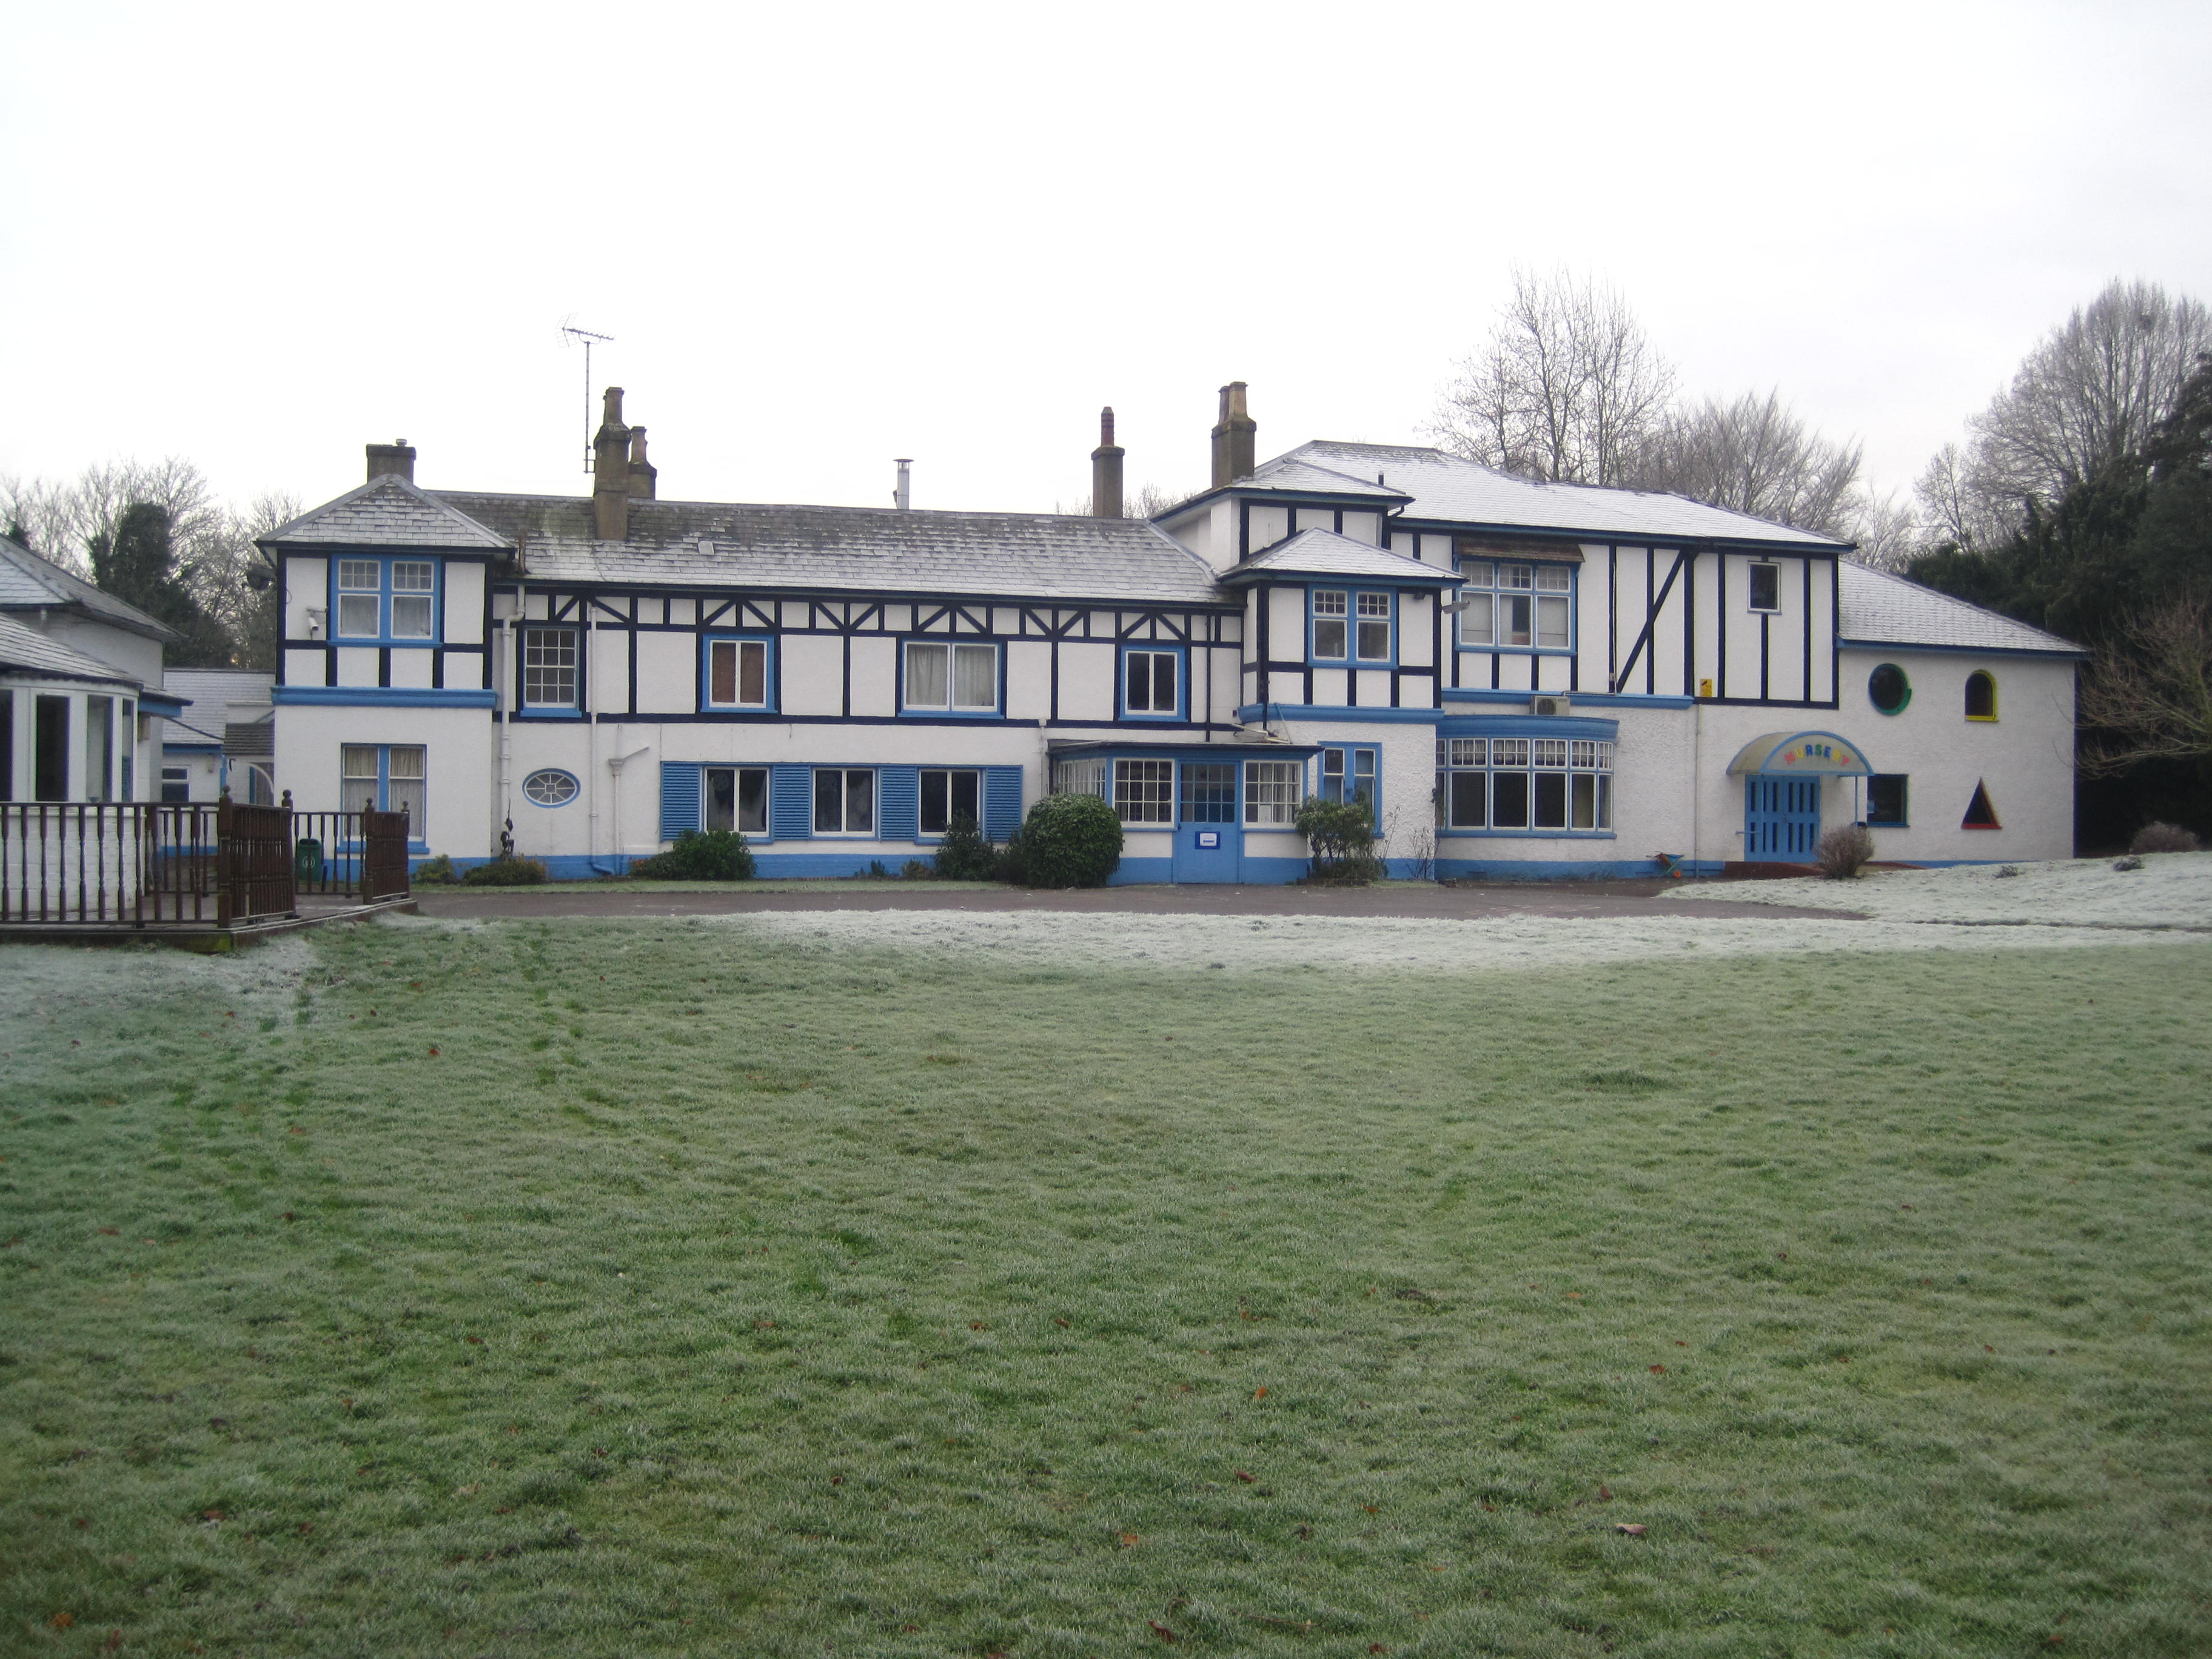 2.61 acre Wokingham site sold to Free School